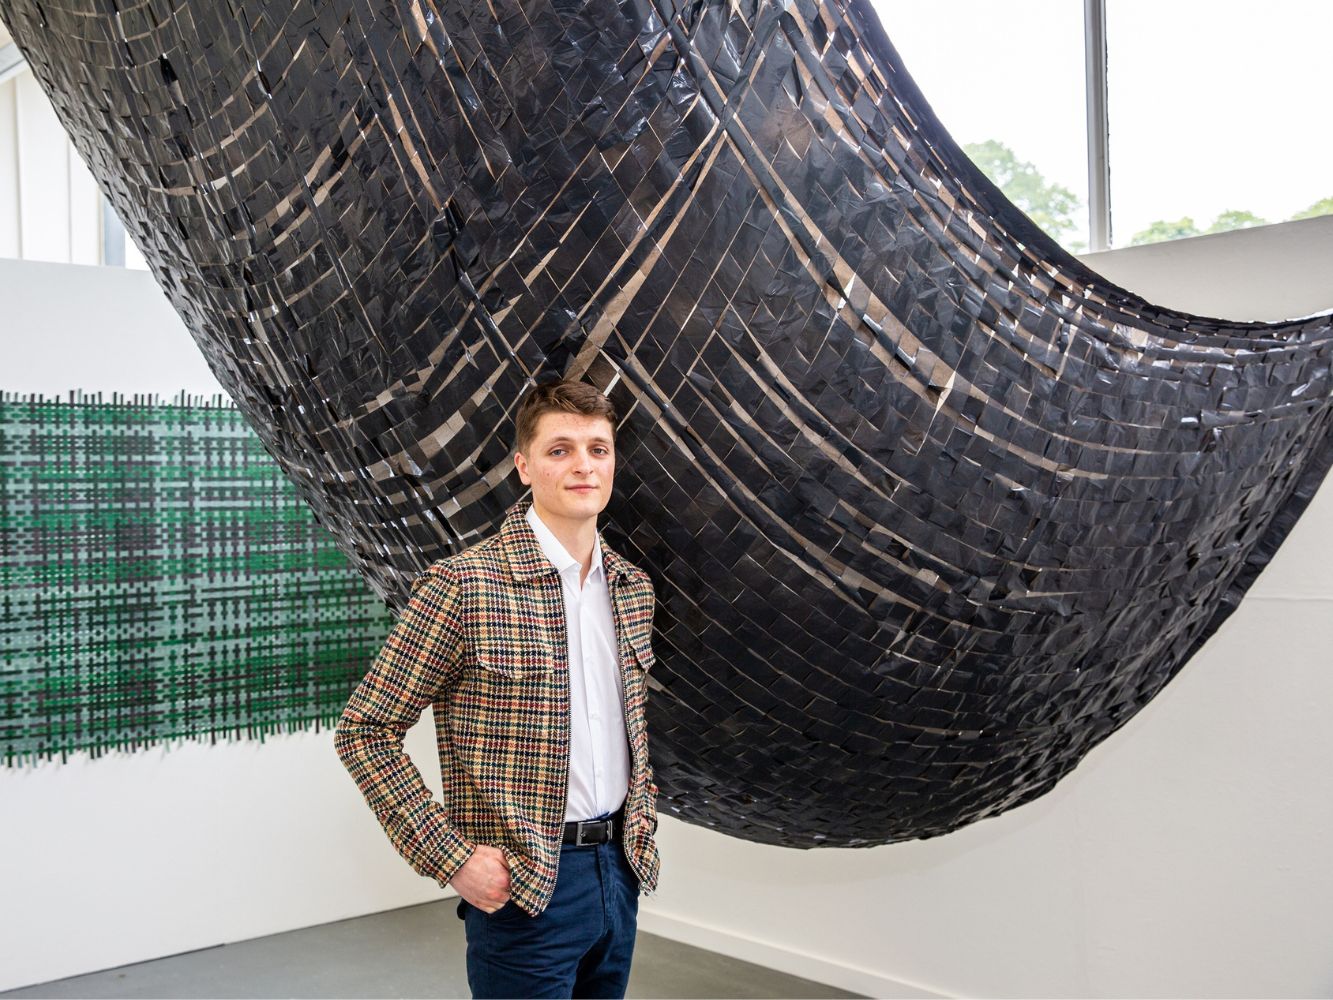 Ian McFadzean poses with artwork